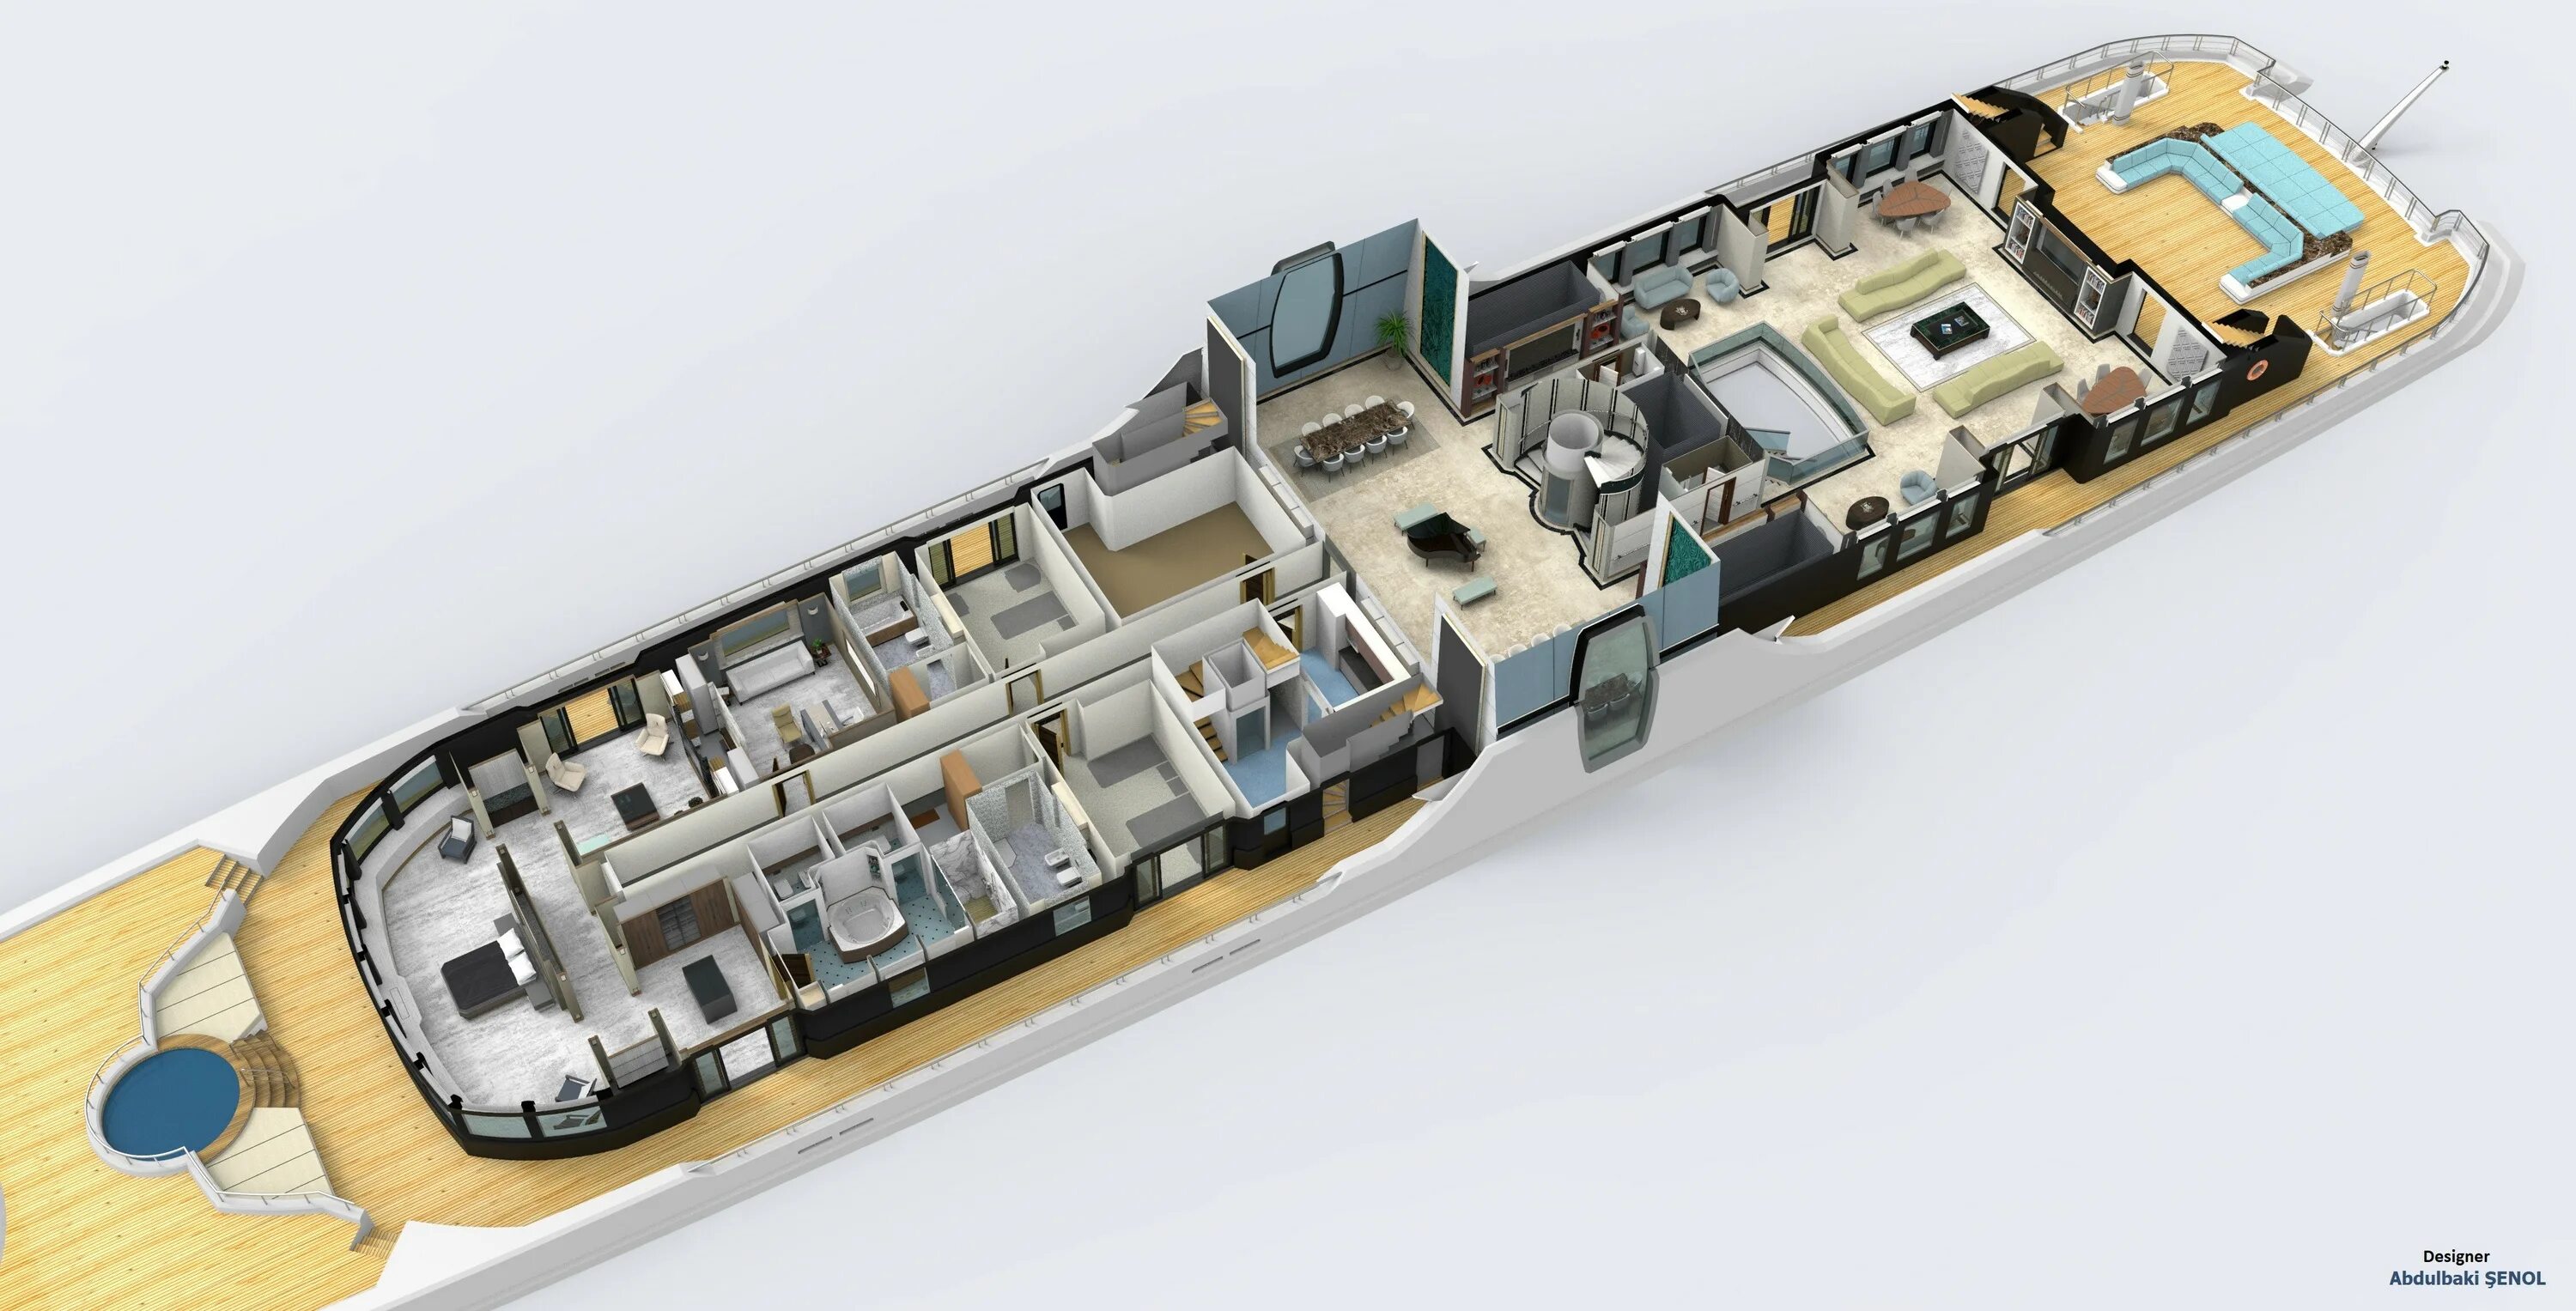 60 Meter Superyacht Blue Moon Deck Plan. Mangusta 165 2009 Deck Plan. Yacht Arience. Express plan